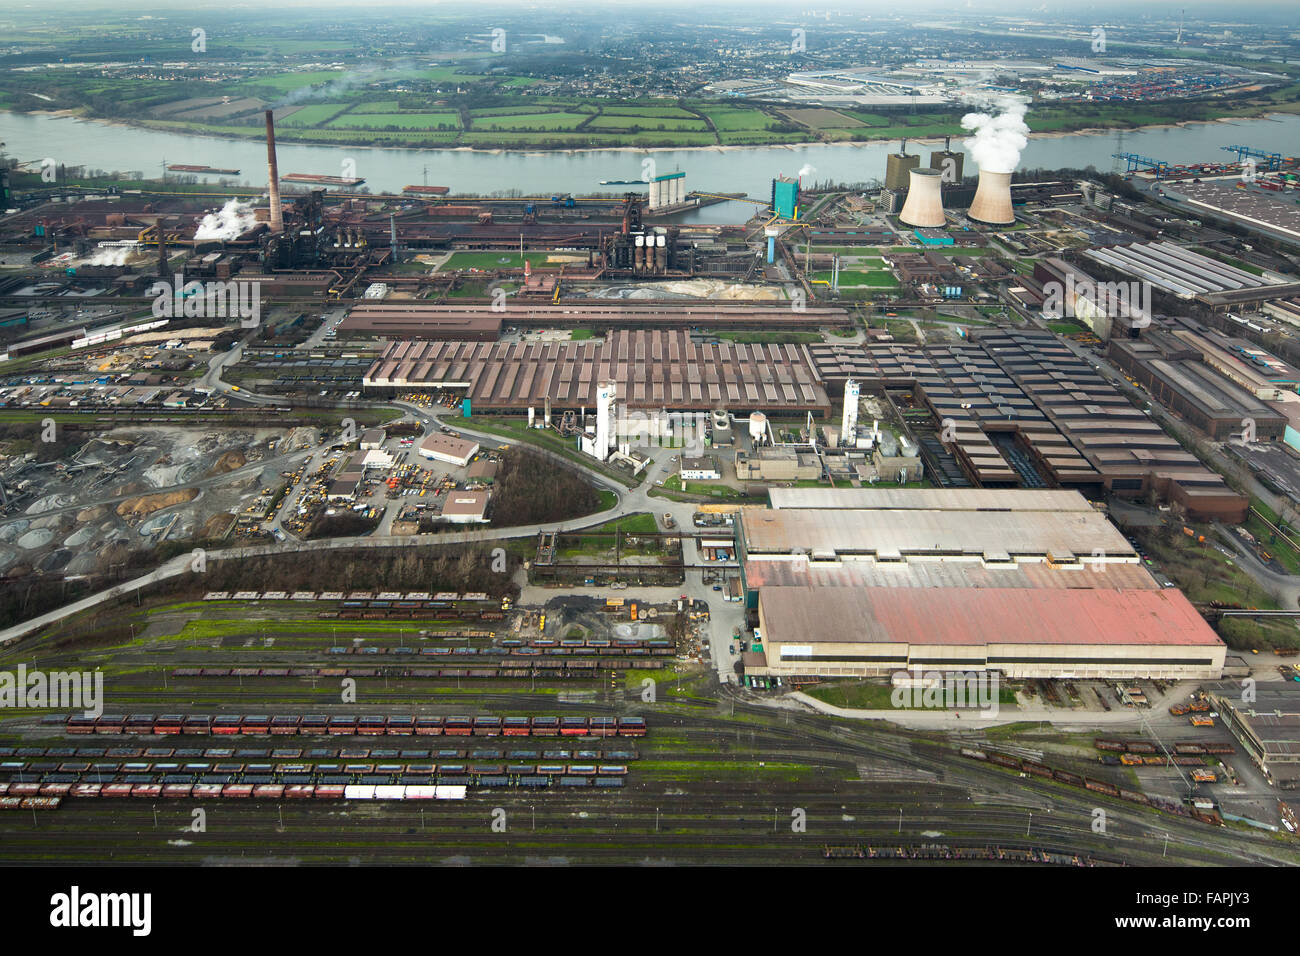 Vista aerea, acciaierie HKM am Rhein, acciaierie Krupp-Mannesmann, Huckingen, comignoli fumanti, coking, paesaggi industriali, Foto Stock